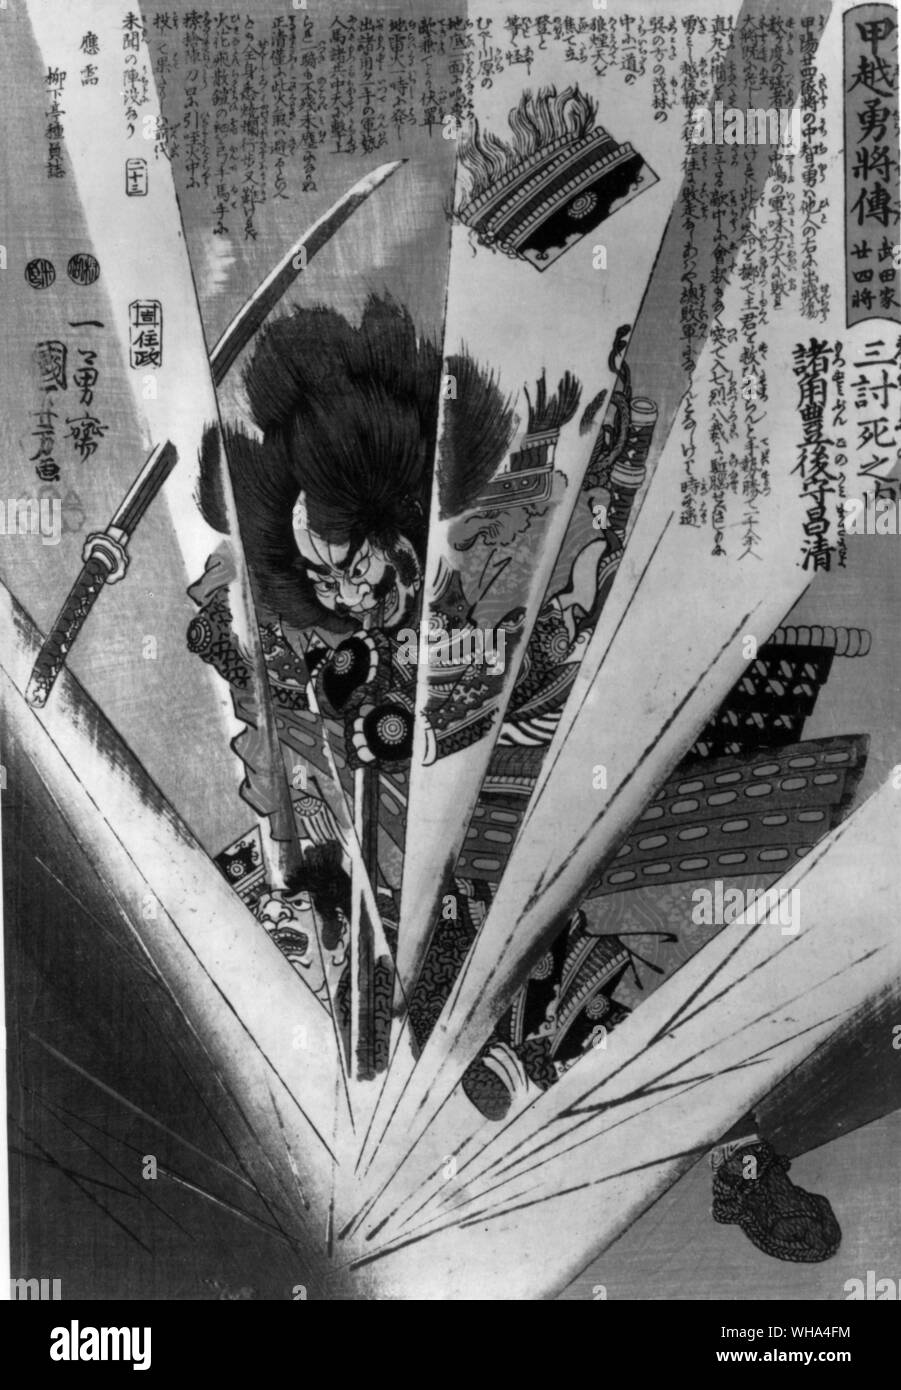 Explosion of a land mine presumably during Nobunaga's struggle for power Stock Photo